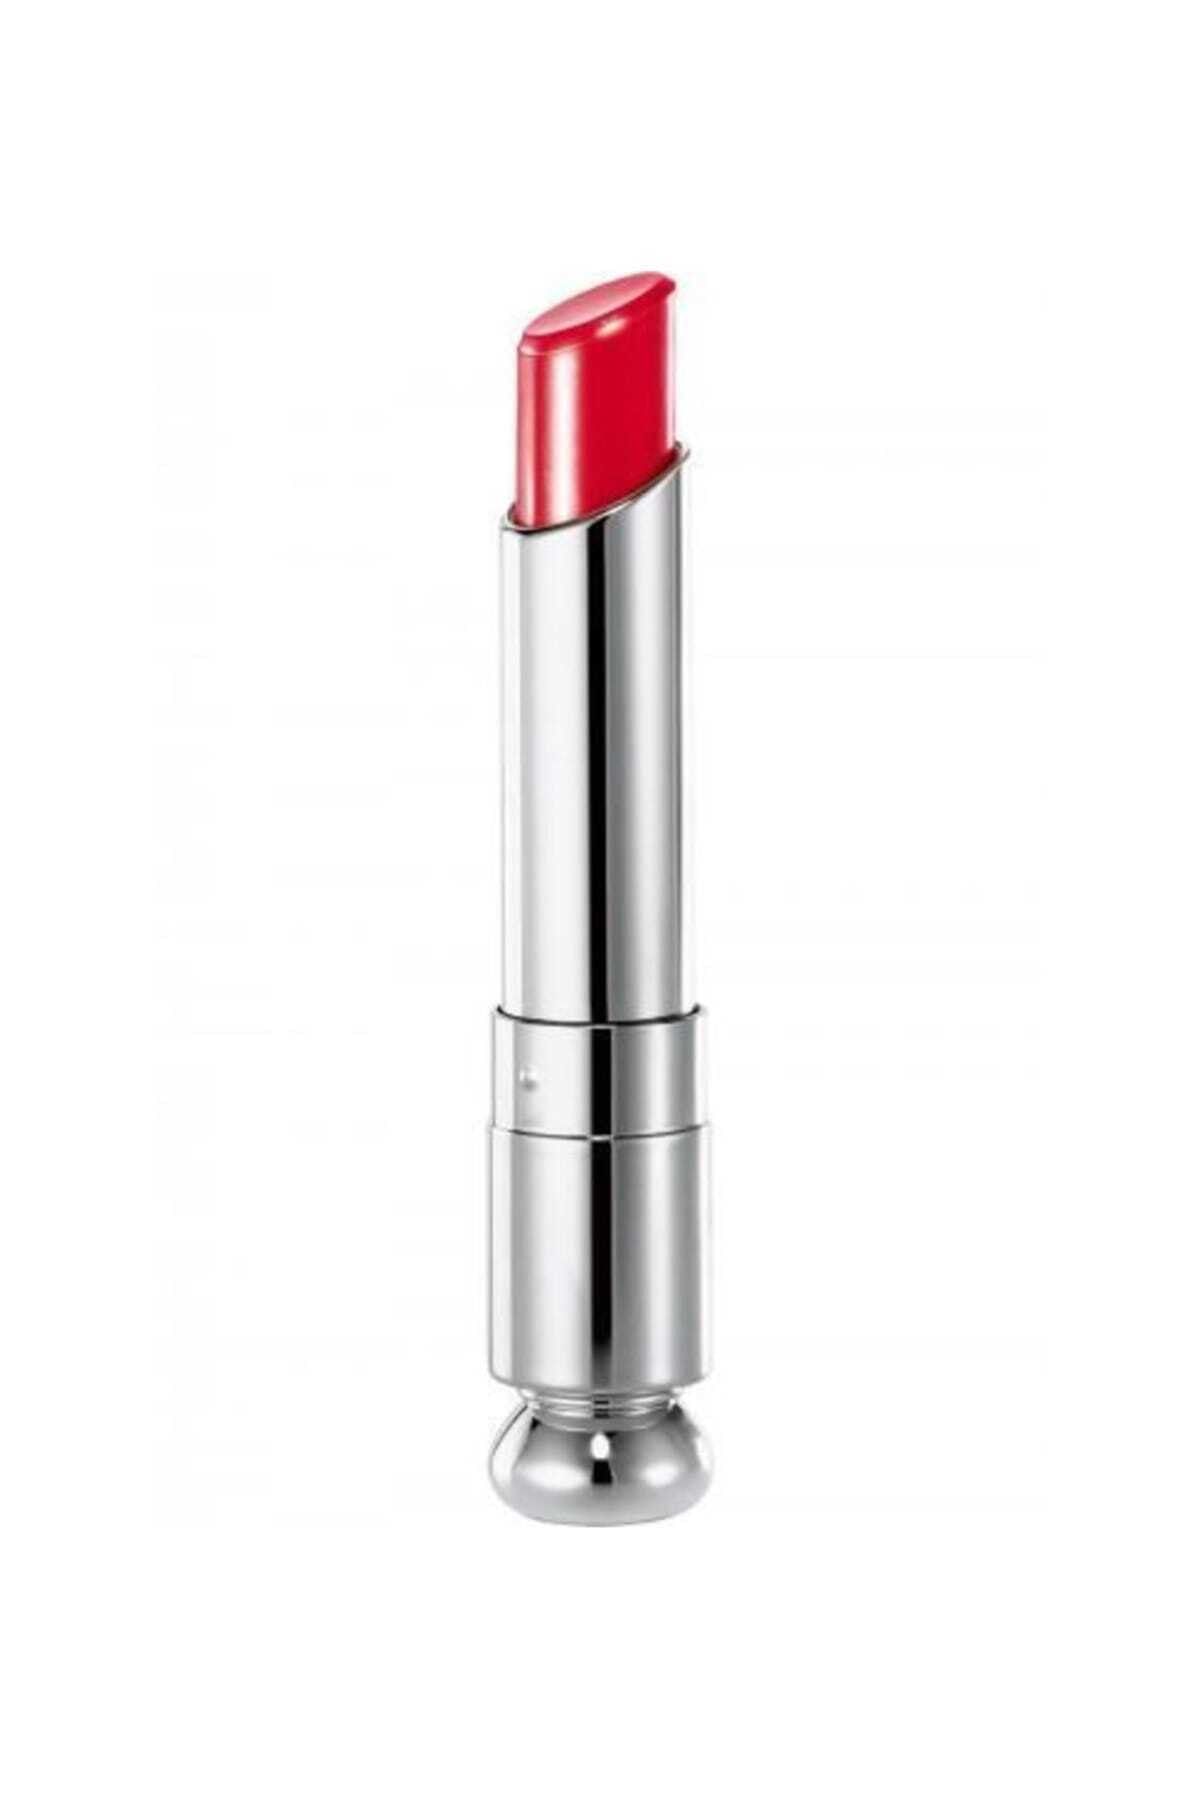 Dior Ruj - Addict Vibrant Color Spectacular Shine Lipstick 745 New Look 3348900998940